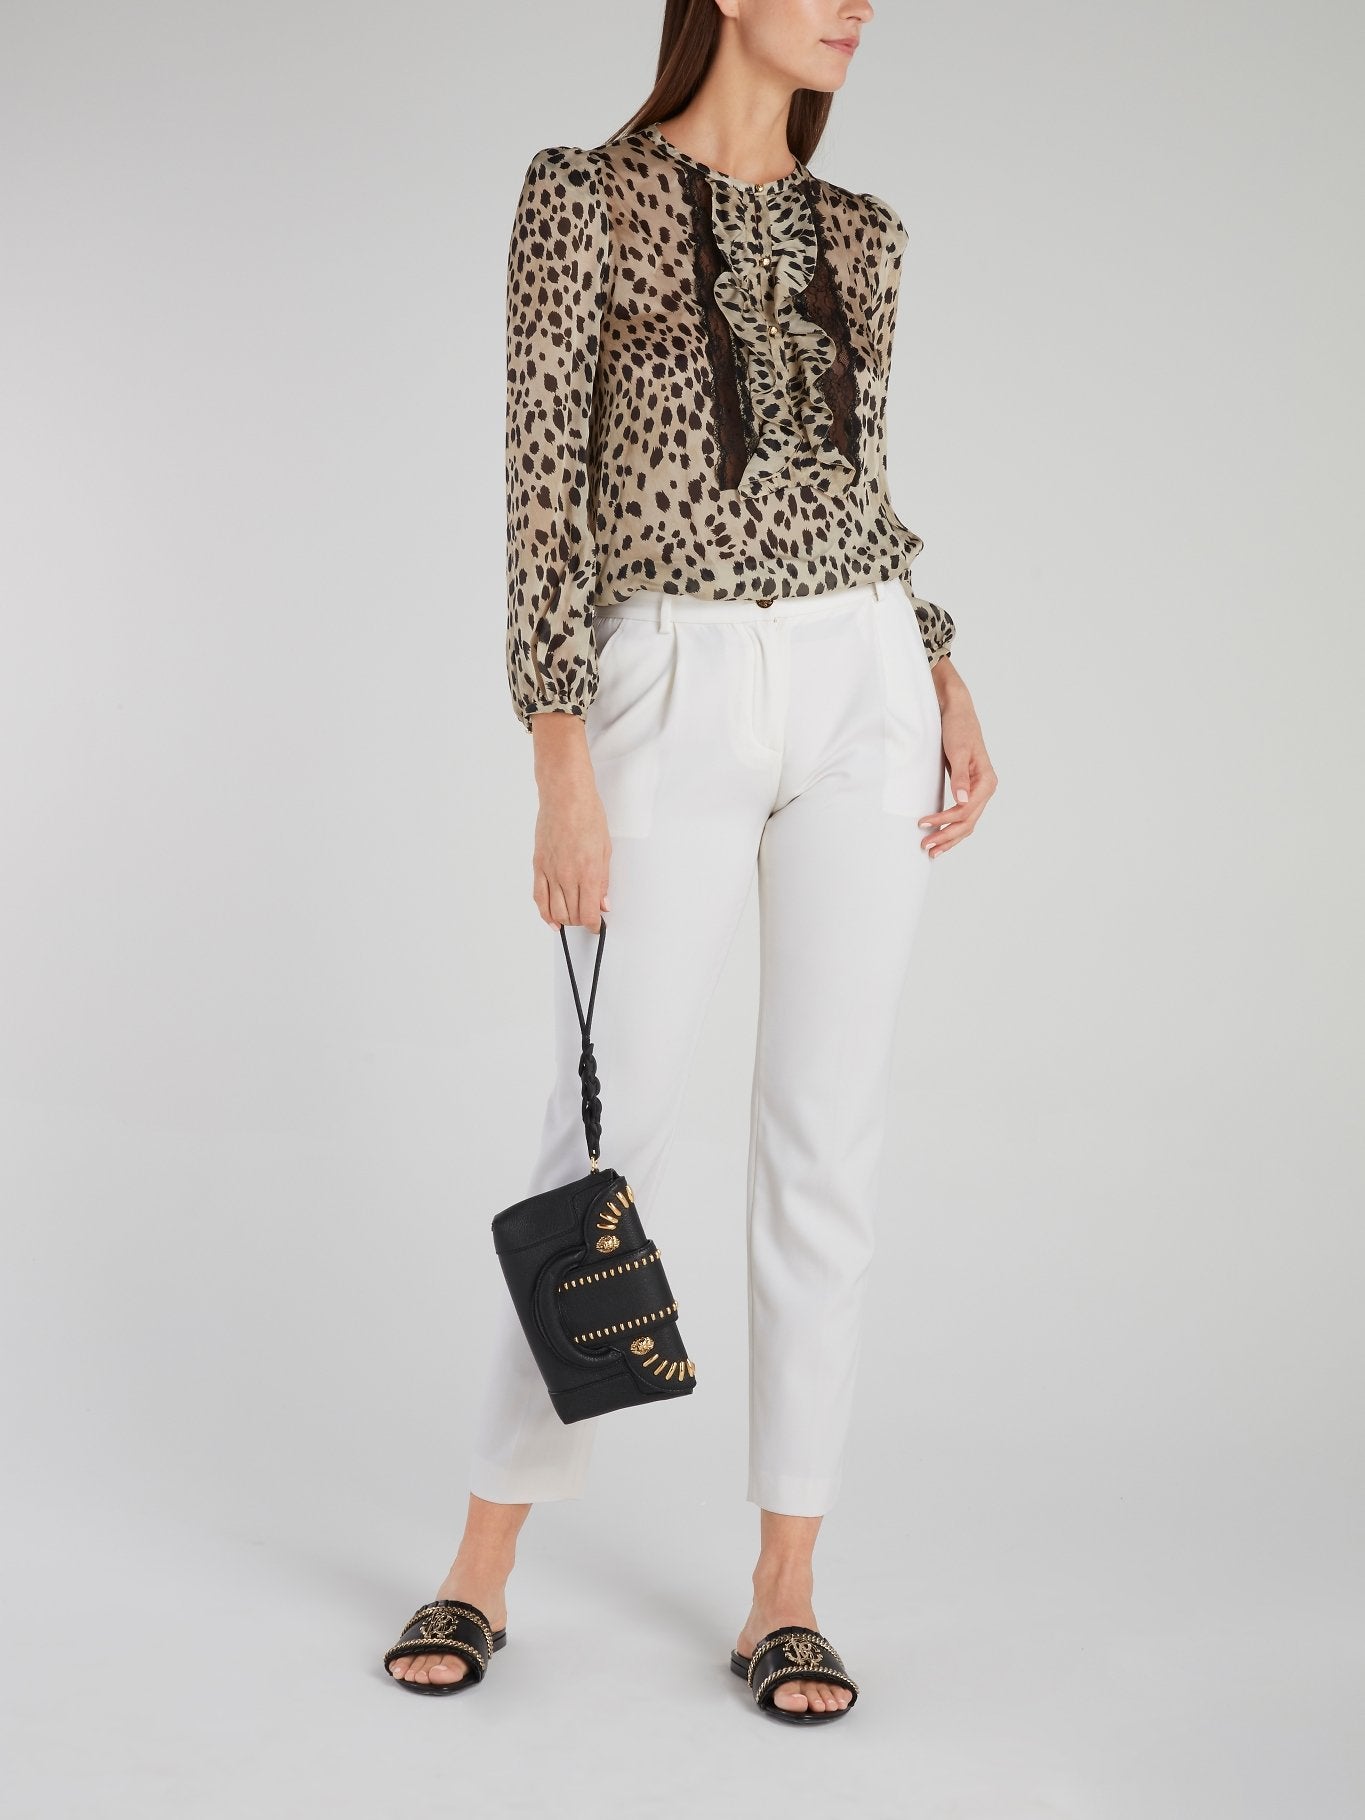 Leopard Print Ruffle Shirt